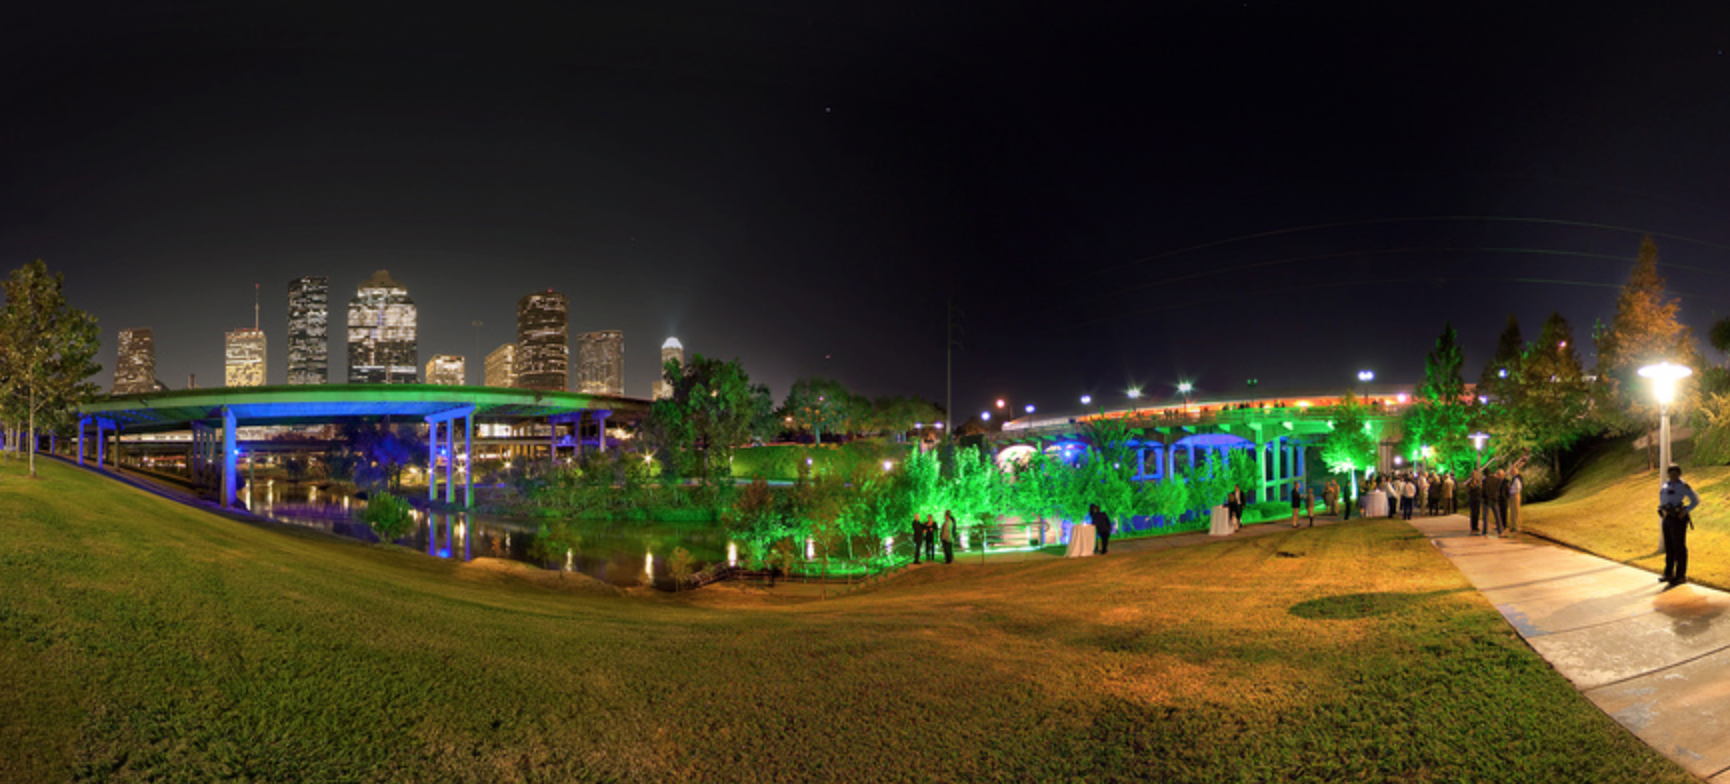 Buffalo Bayou event at night